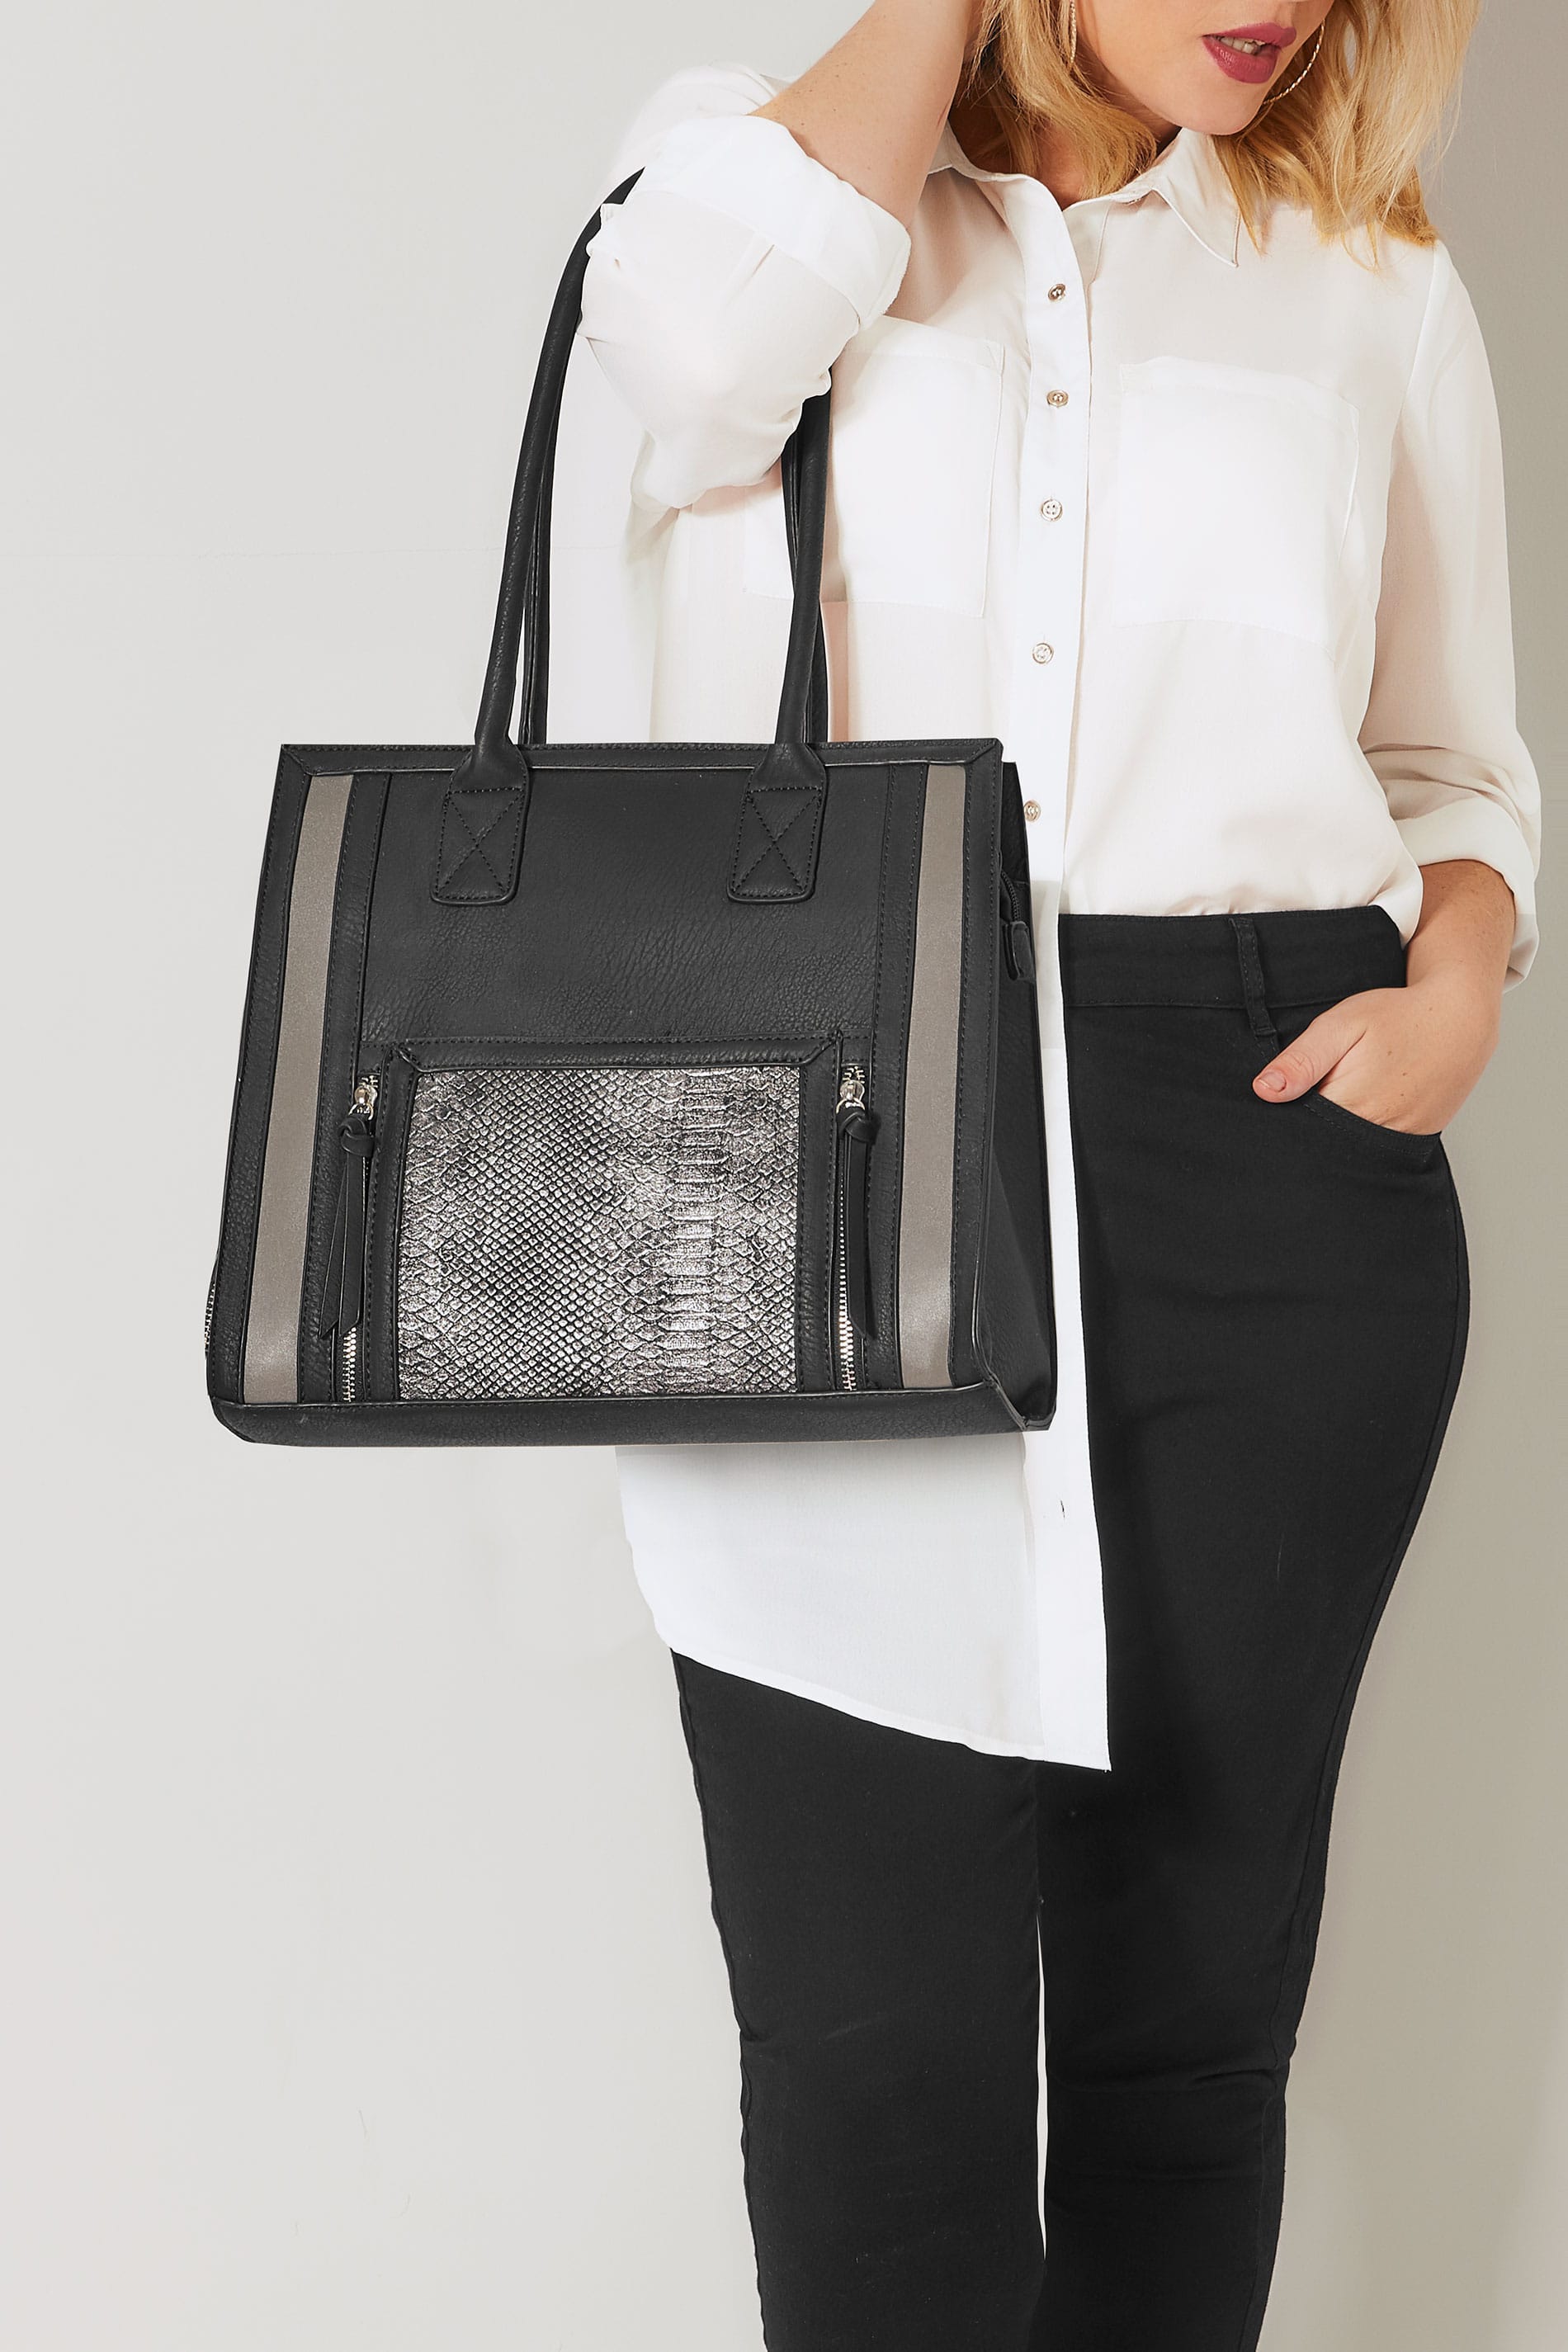 Black & Grey Snakeskin Effect Panelled Shopper Bag With Zip Details & Extended Handles1900 x 2850